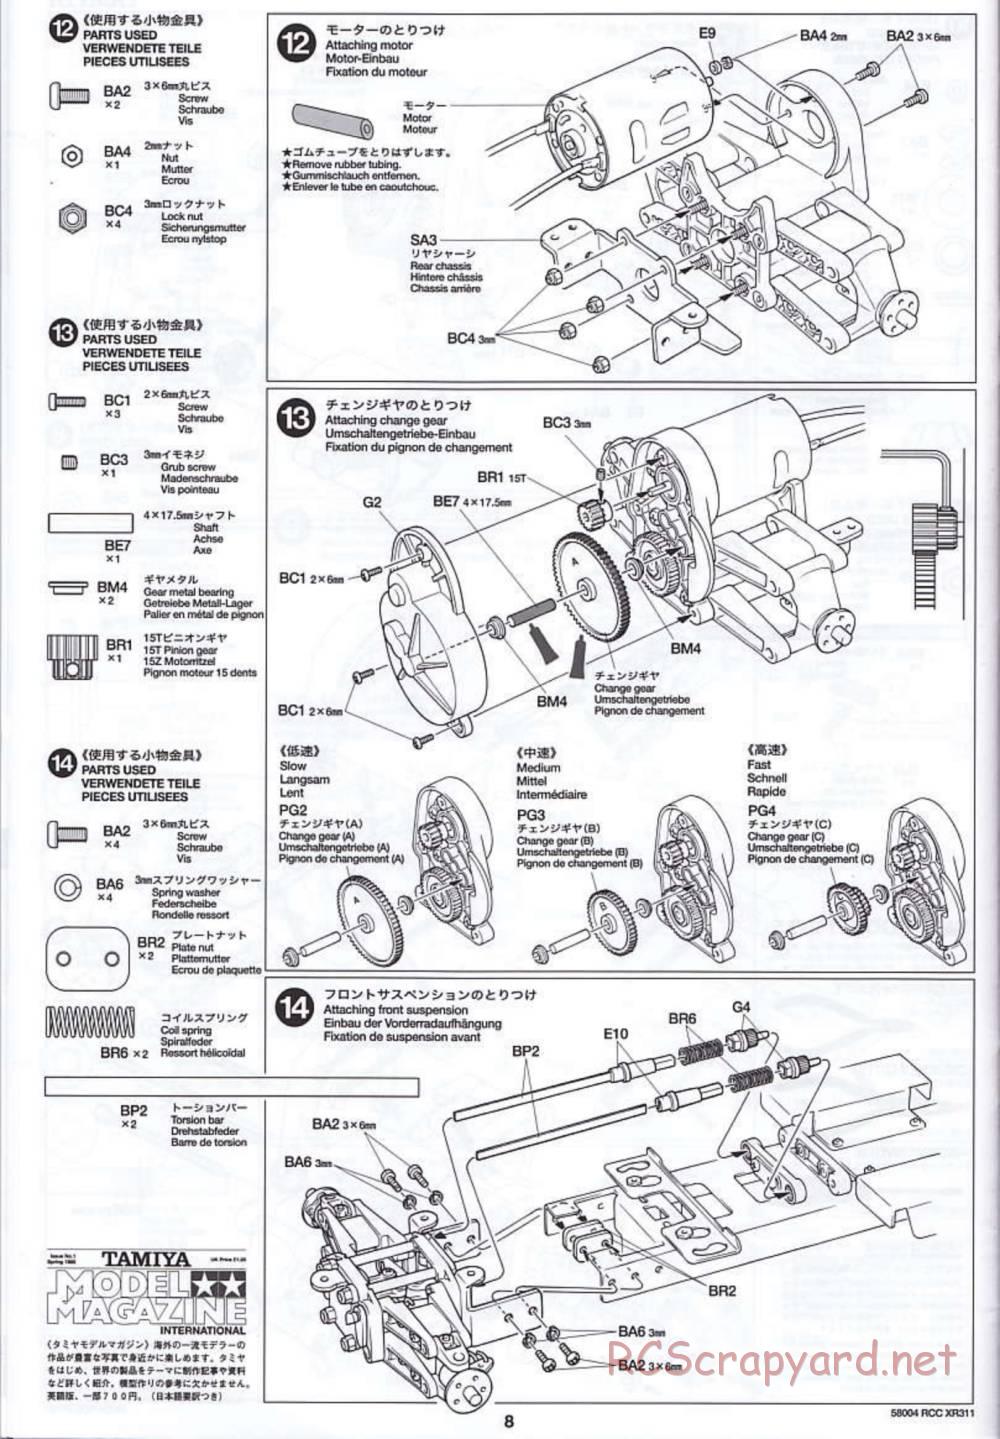 Tamiya - XR311 Combat Support Vehicle (2000) - 58004 - Manual - Page 9